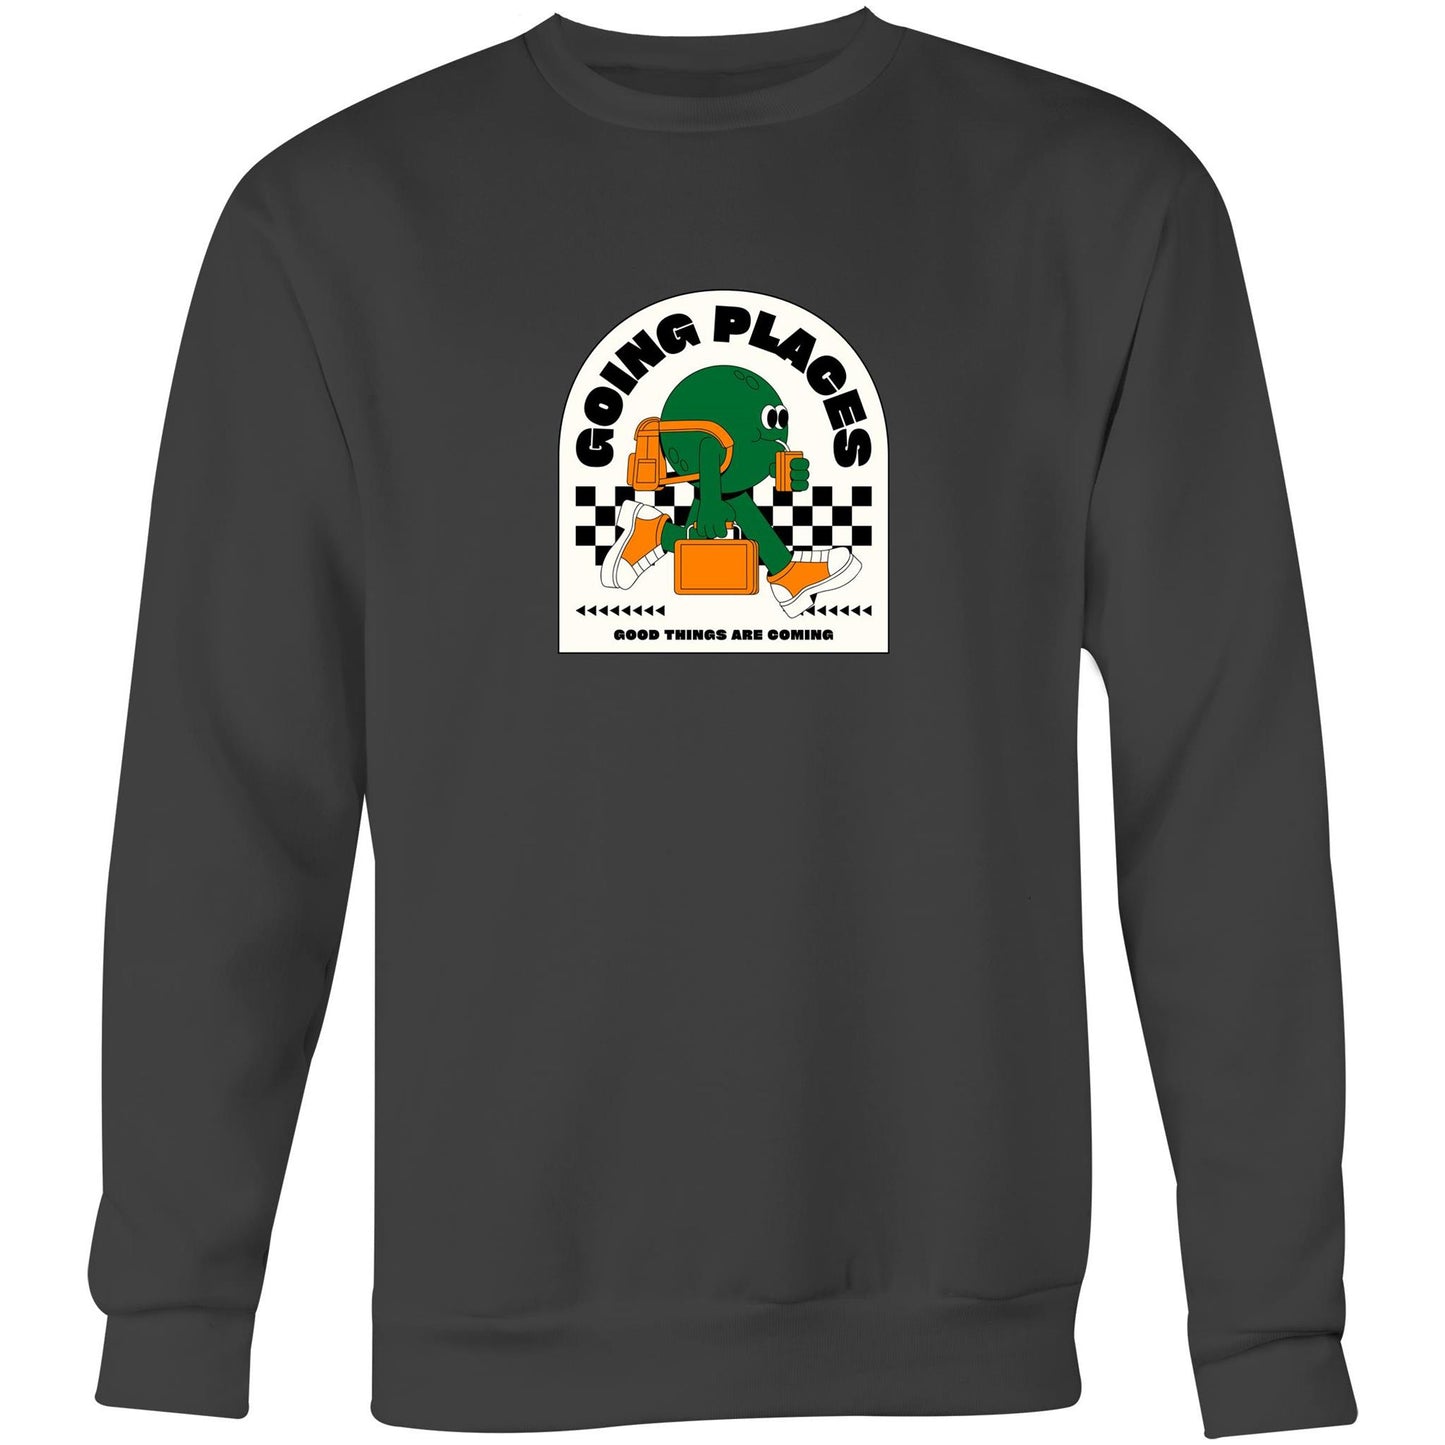 Going Places - Crew Sweatshirt Coal Sweatshirt Retro